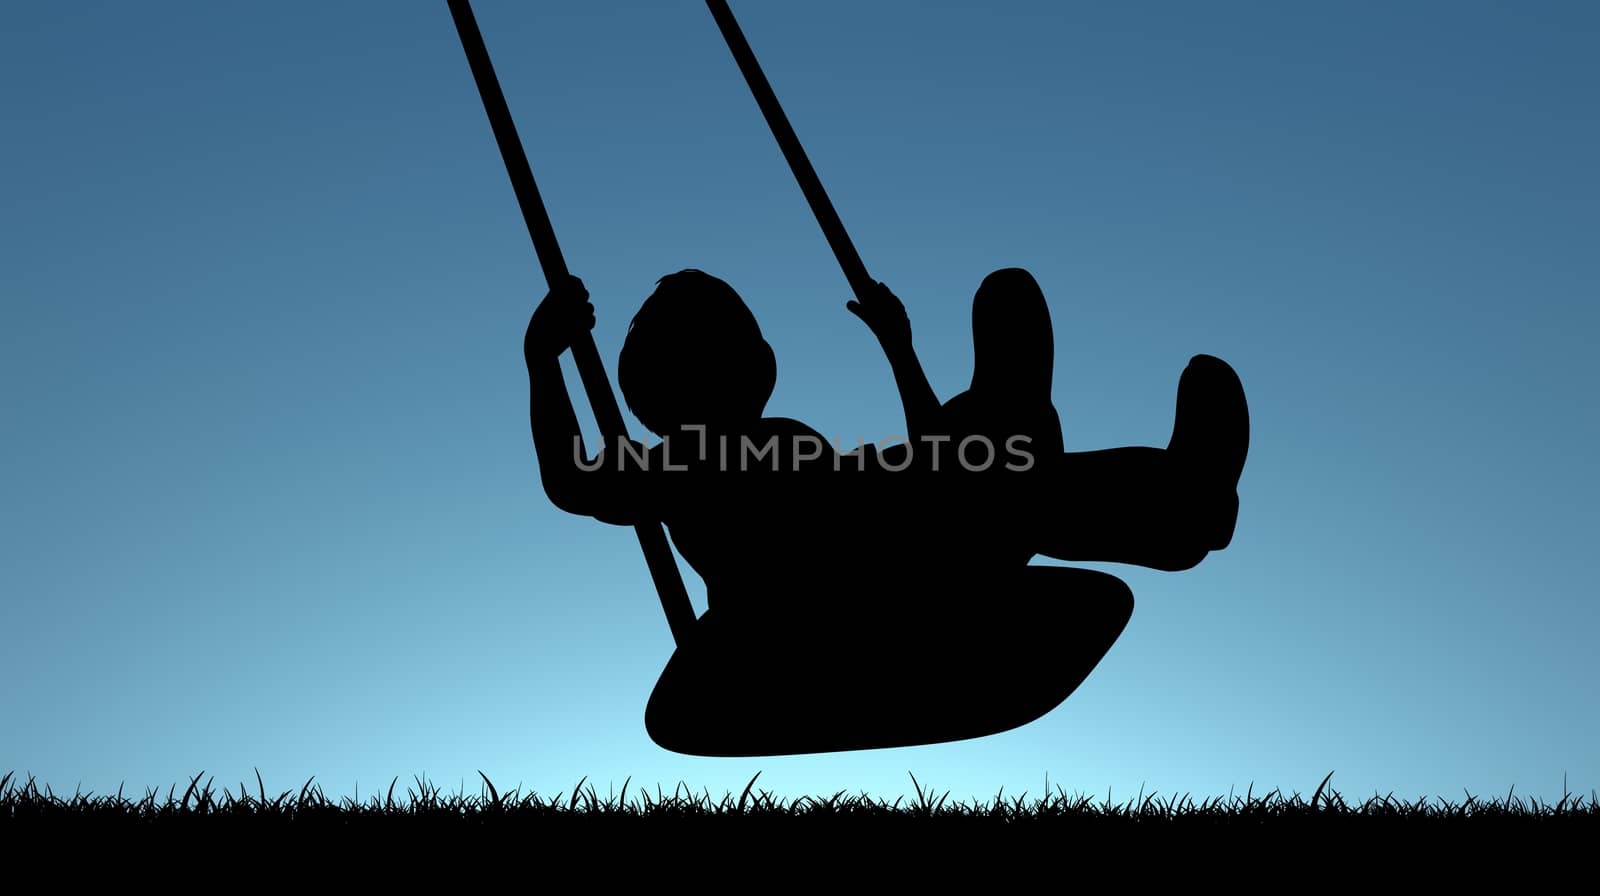 Child on Swing by darrenwhittingham